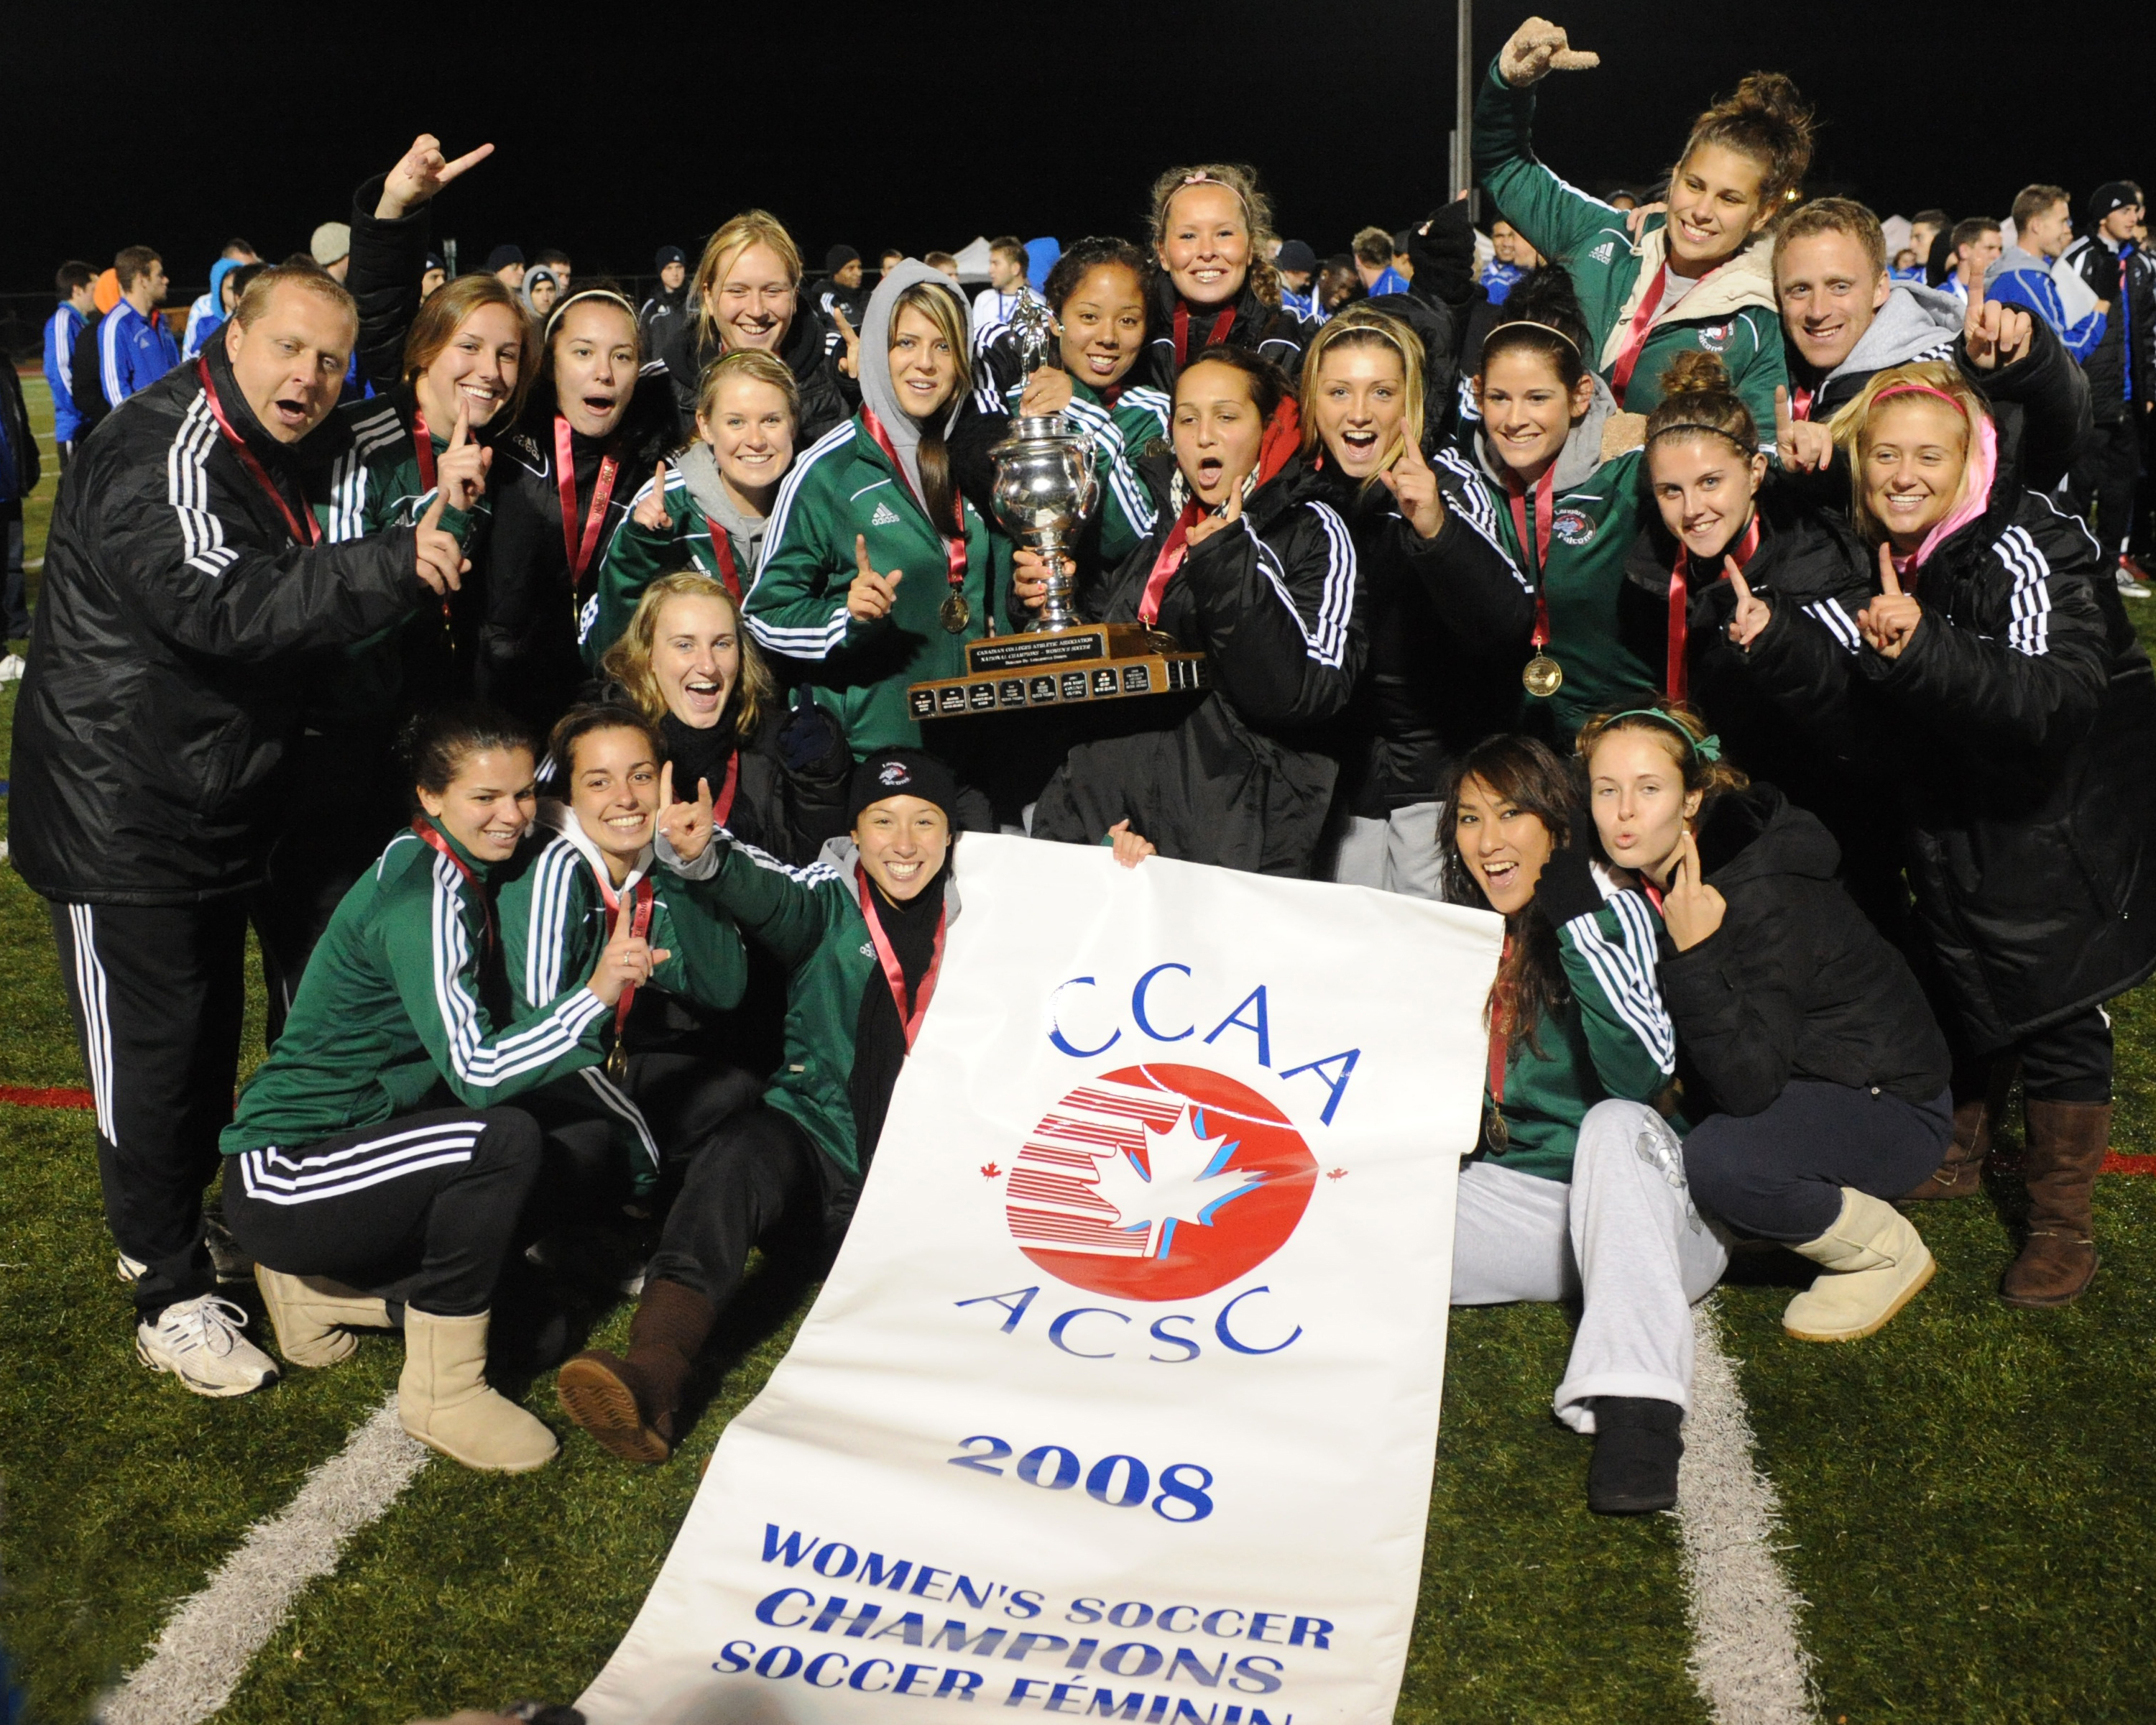 Falcons 2008 Women's Soccer championship team.